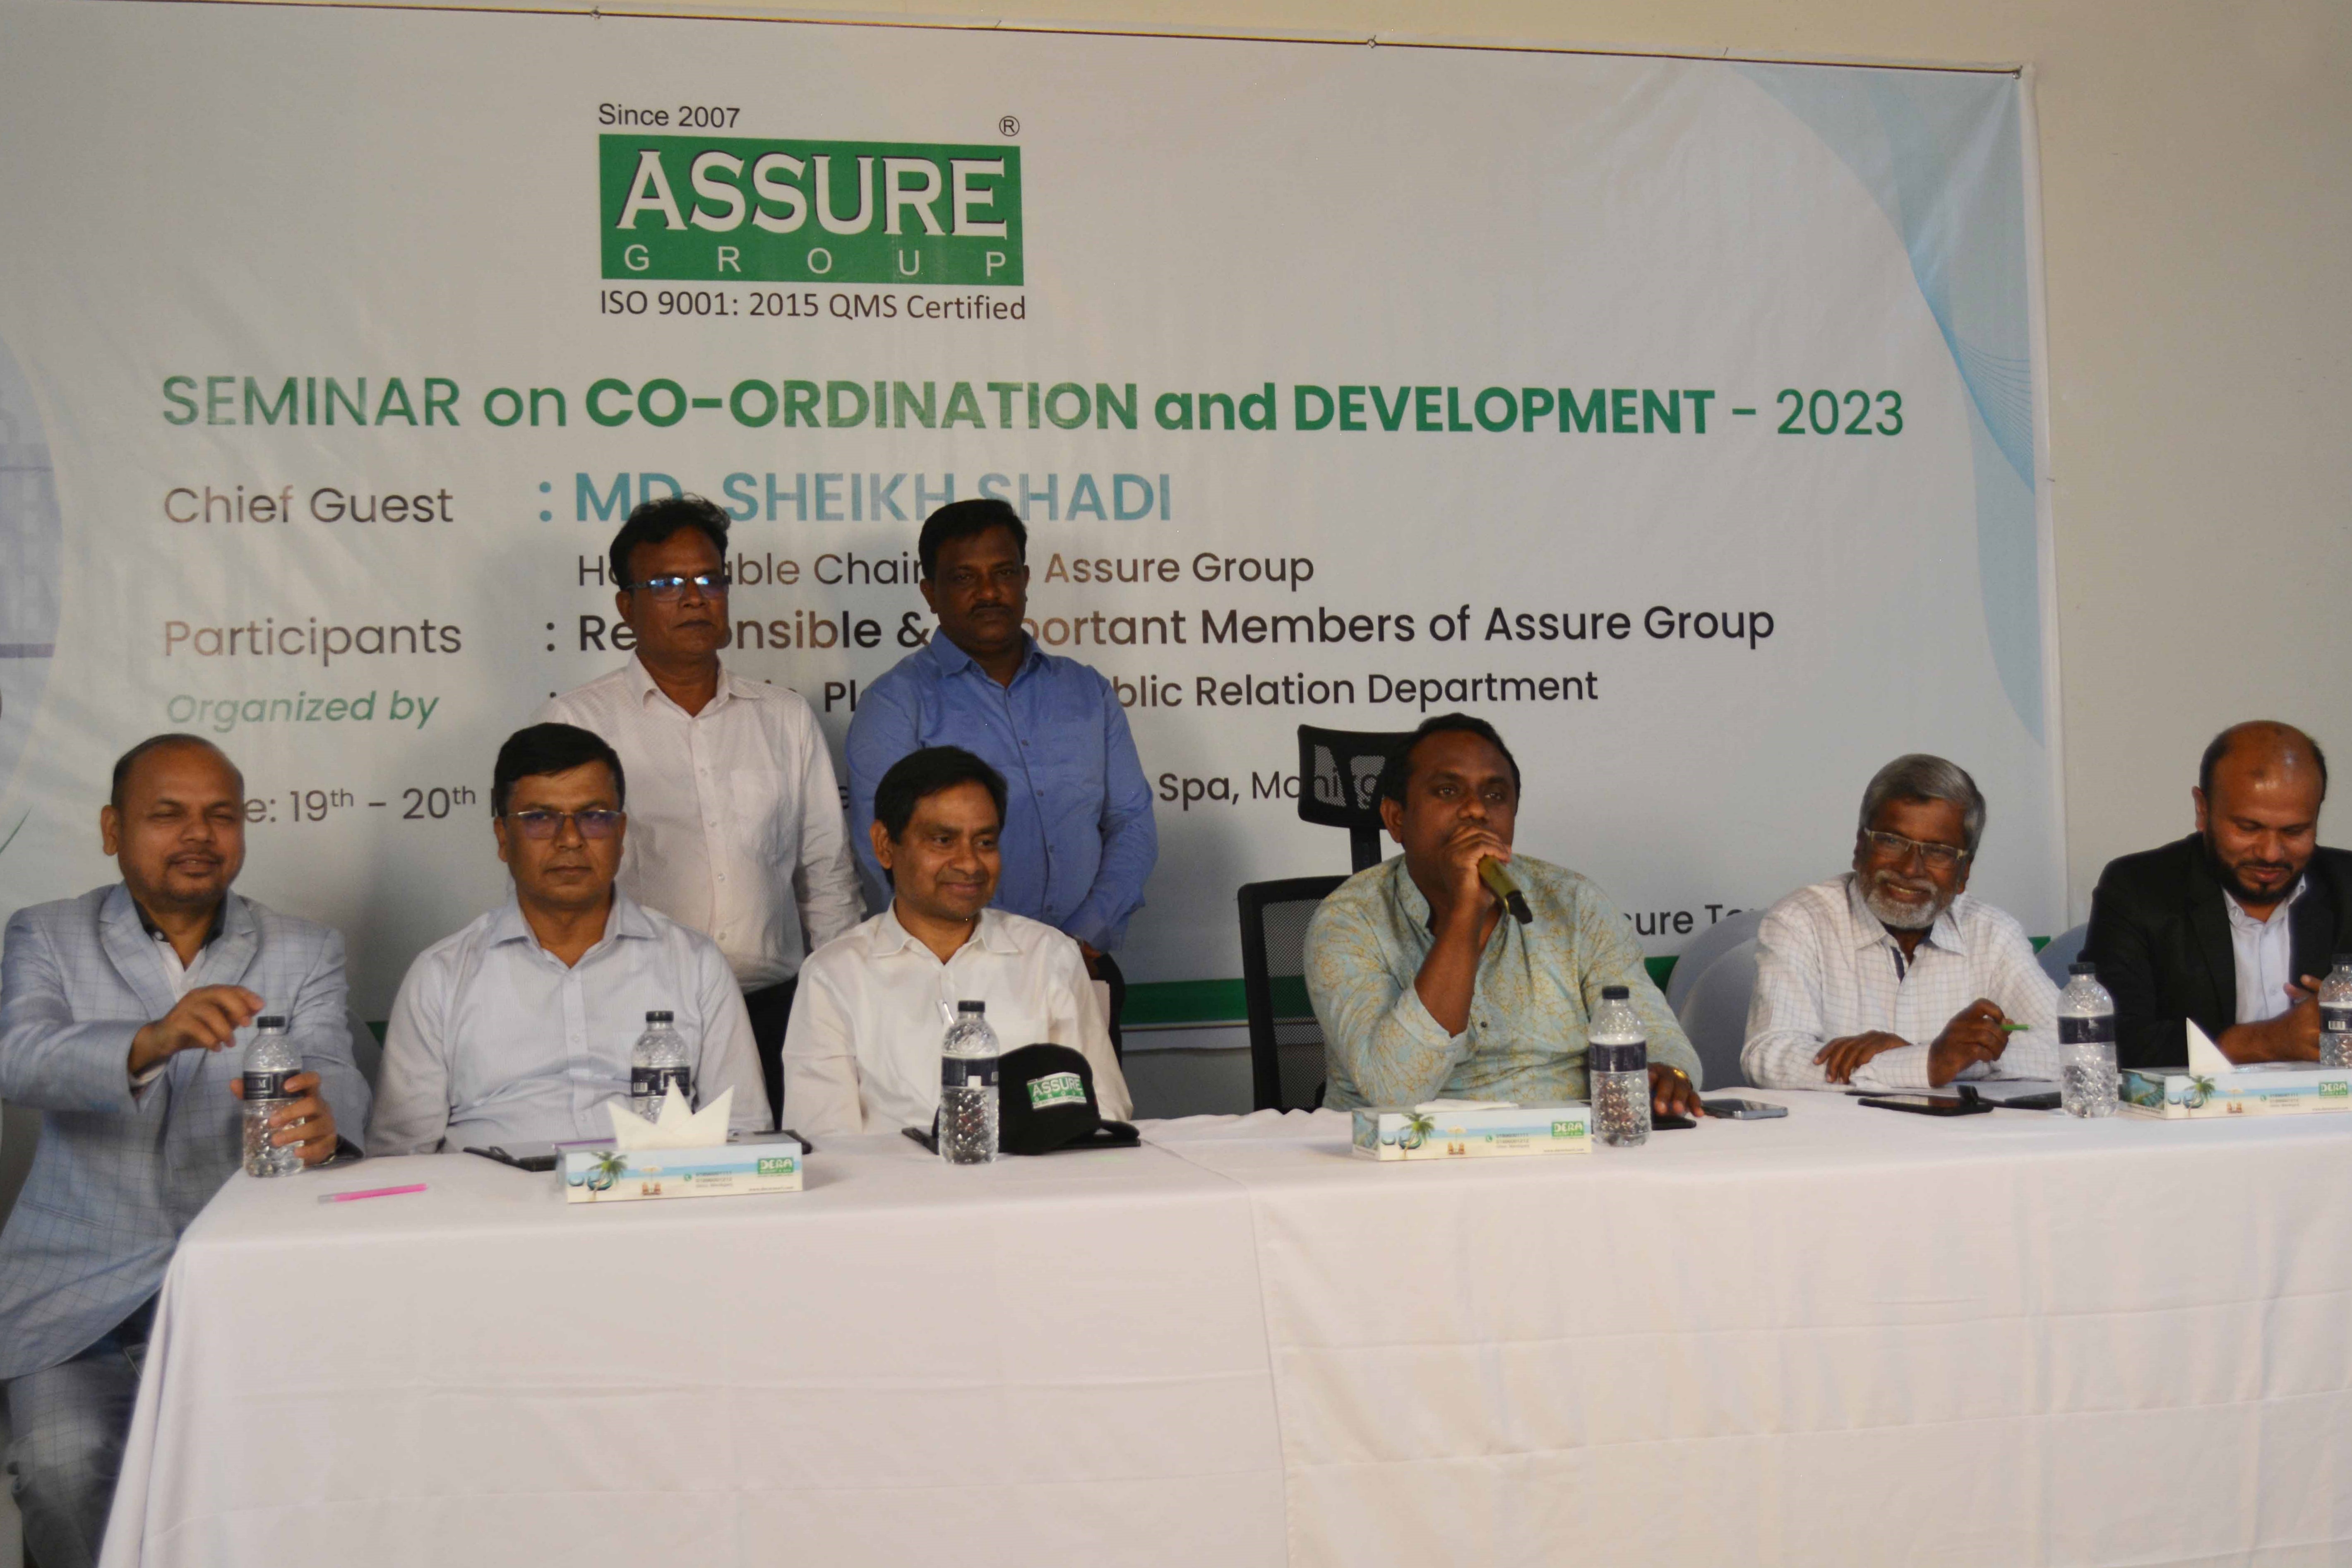 Assure Group Meeting 2023